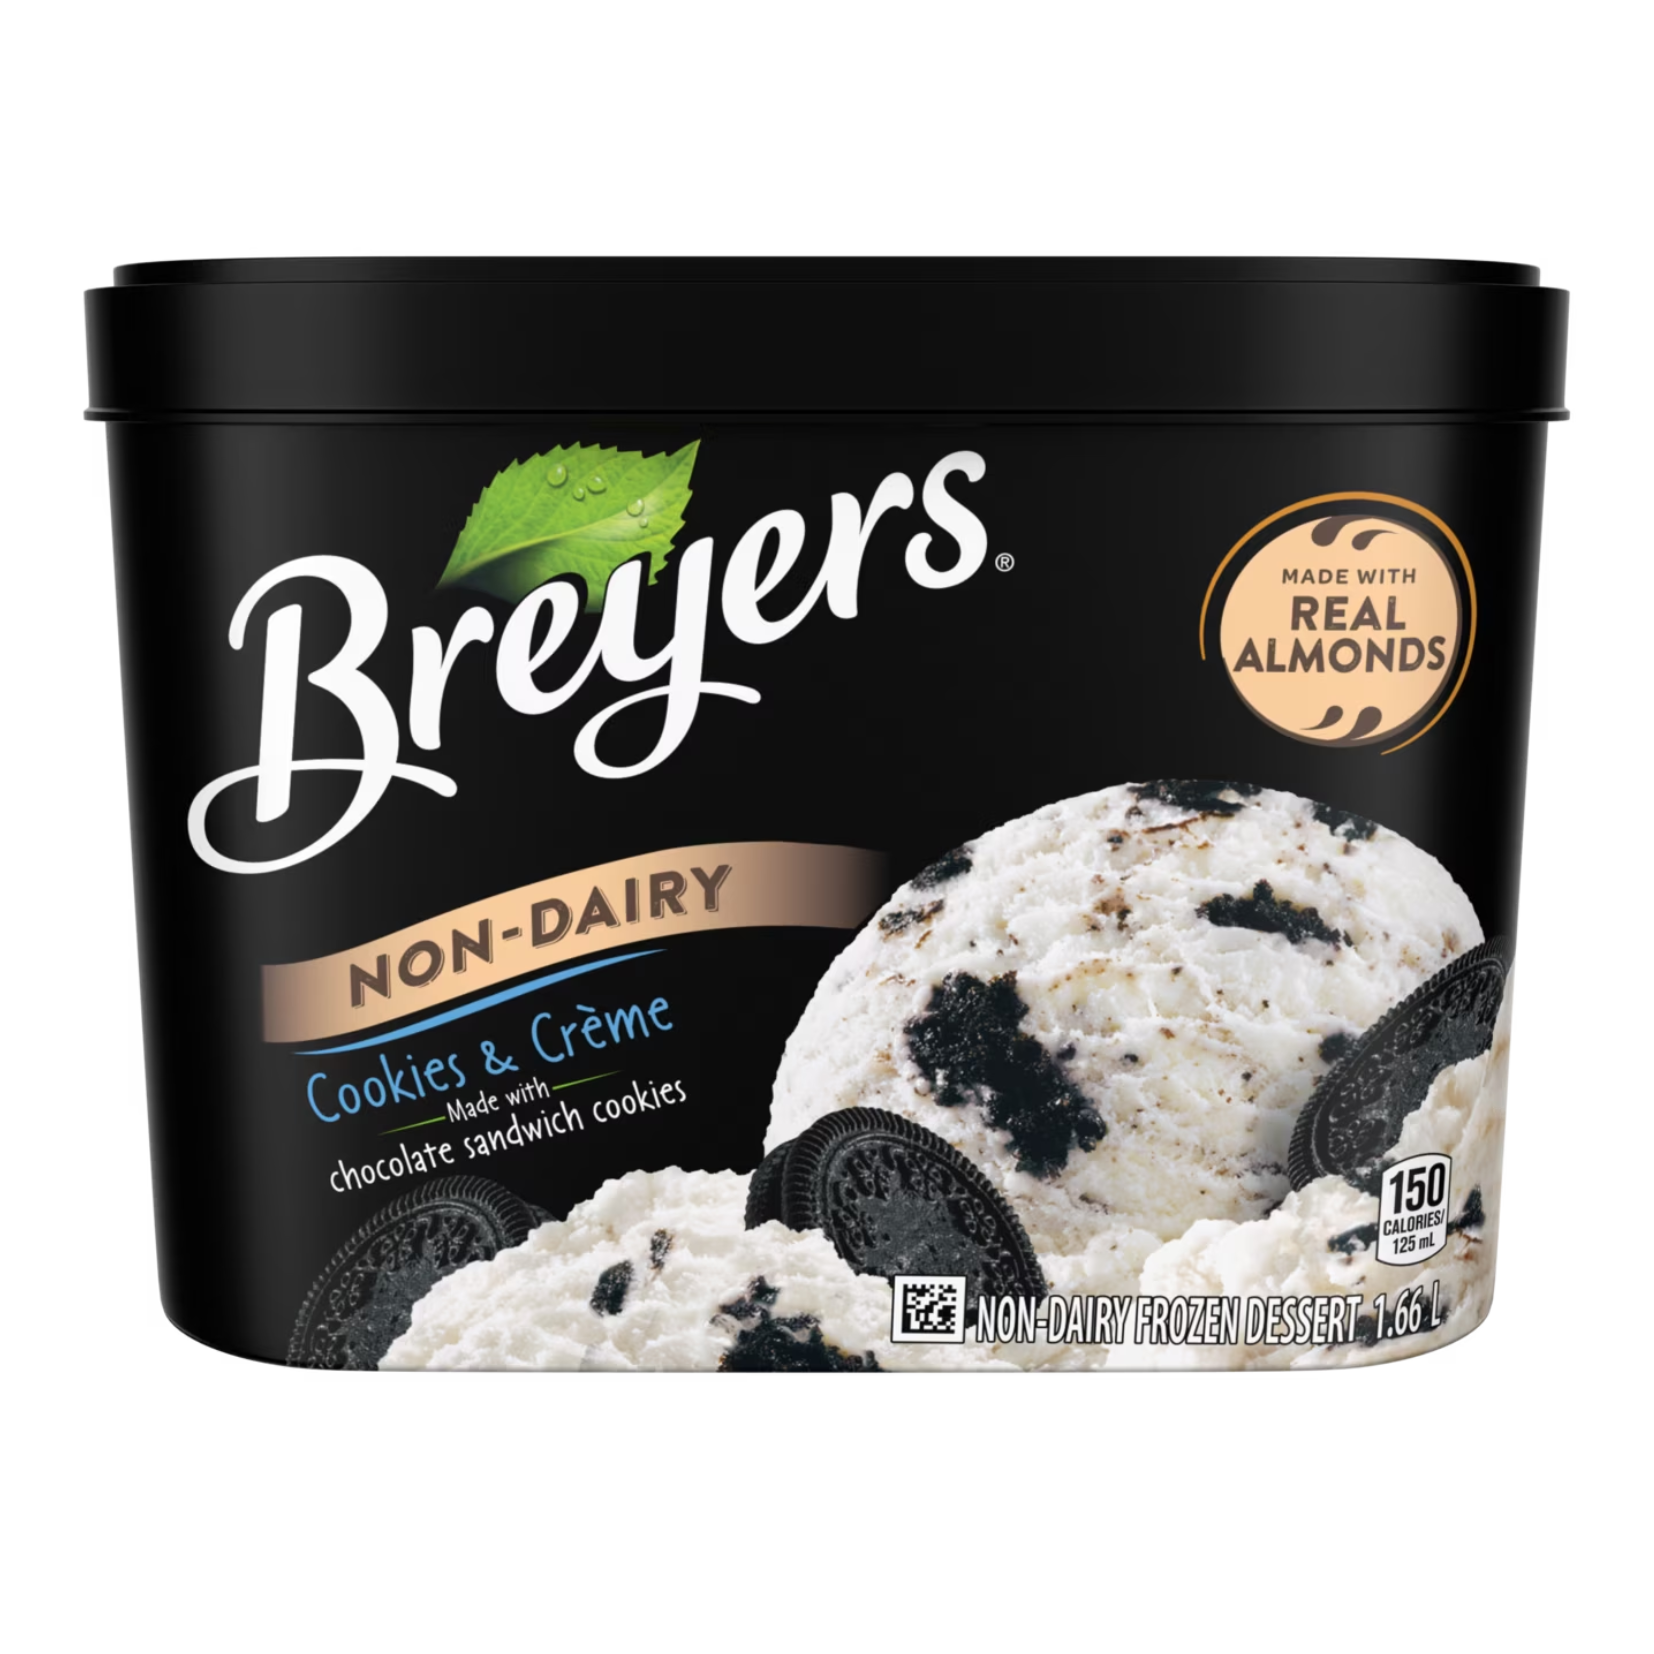 Breyers Non Dairy Cookies & Cream Ice Cream 1.66L